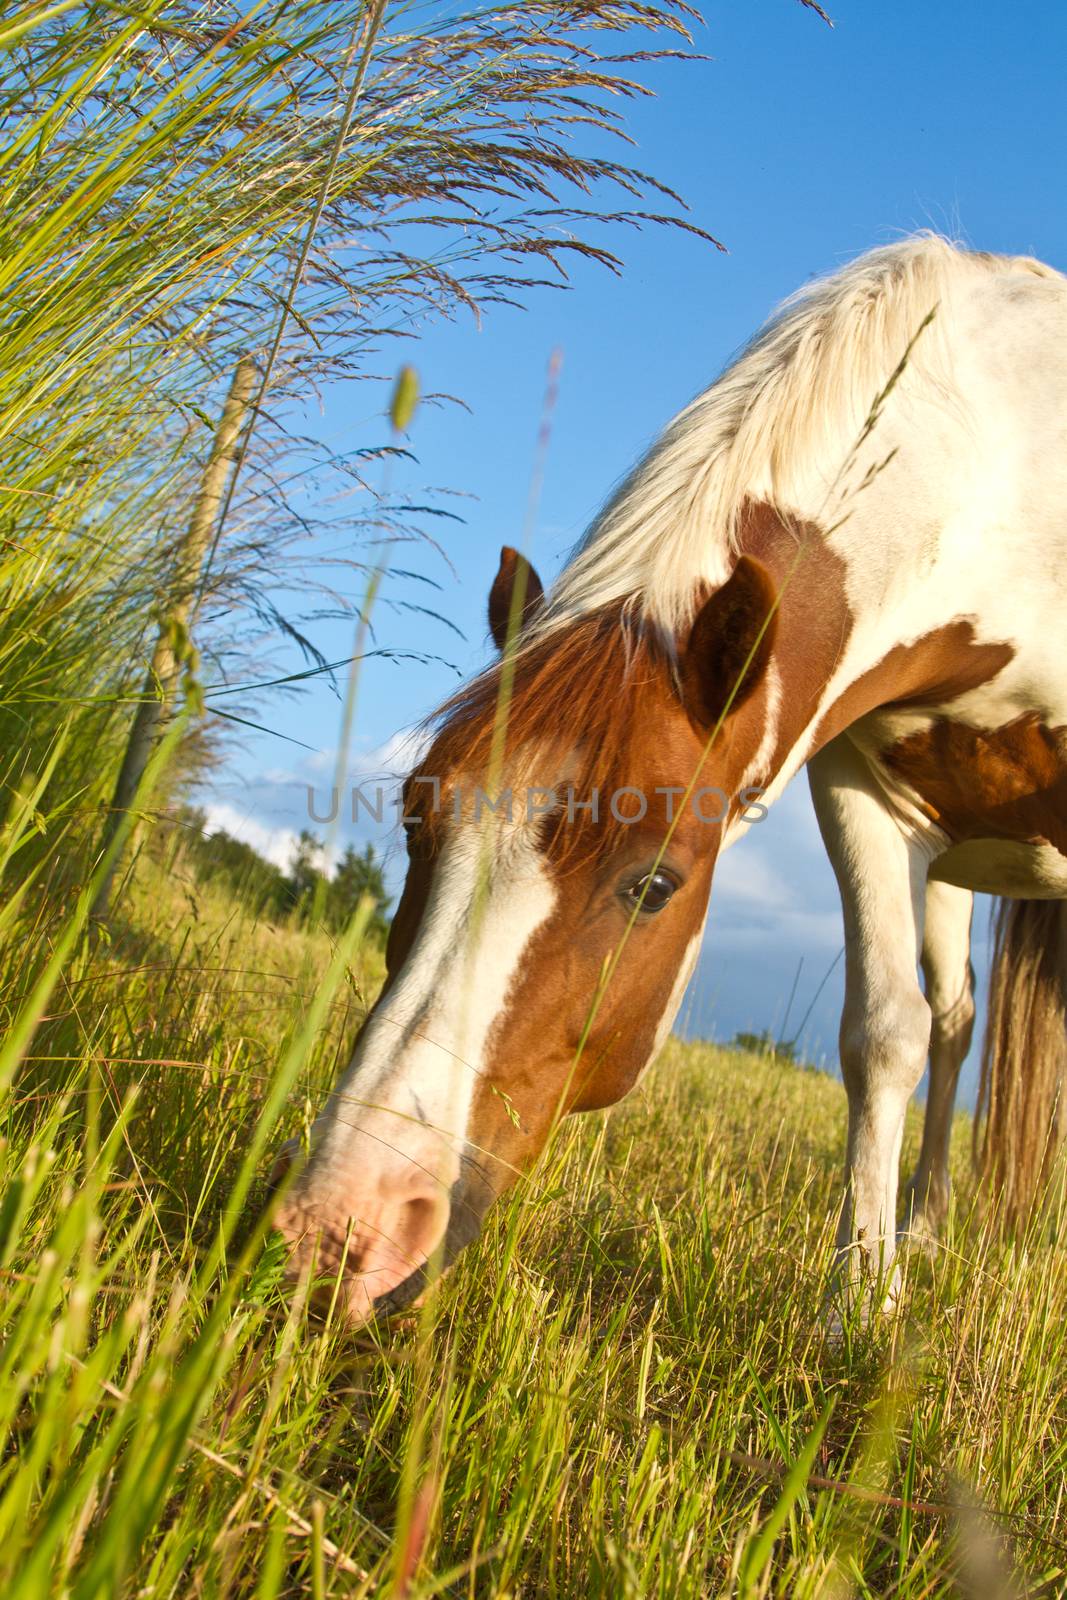 Horse on a field in the summer in denmark